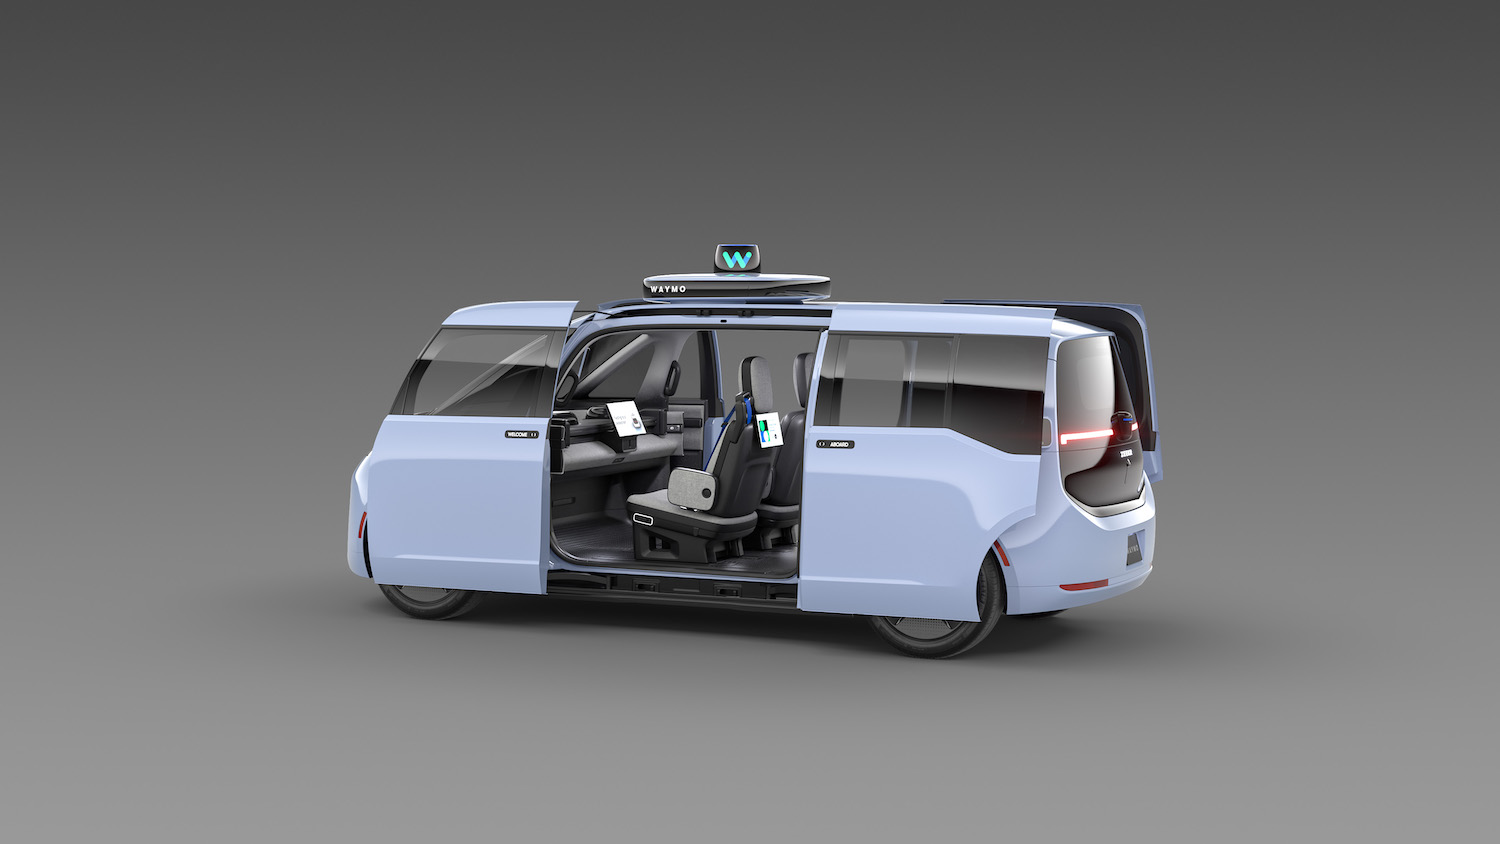 Waymo's rider-first, autonomous vehicle designed in partnership with Zeekr